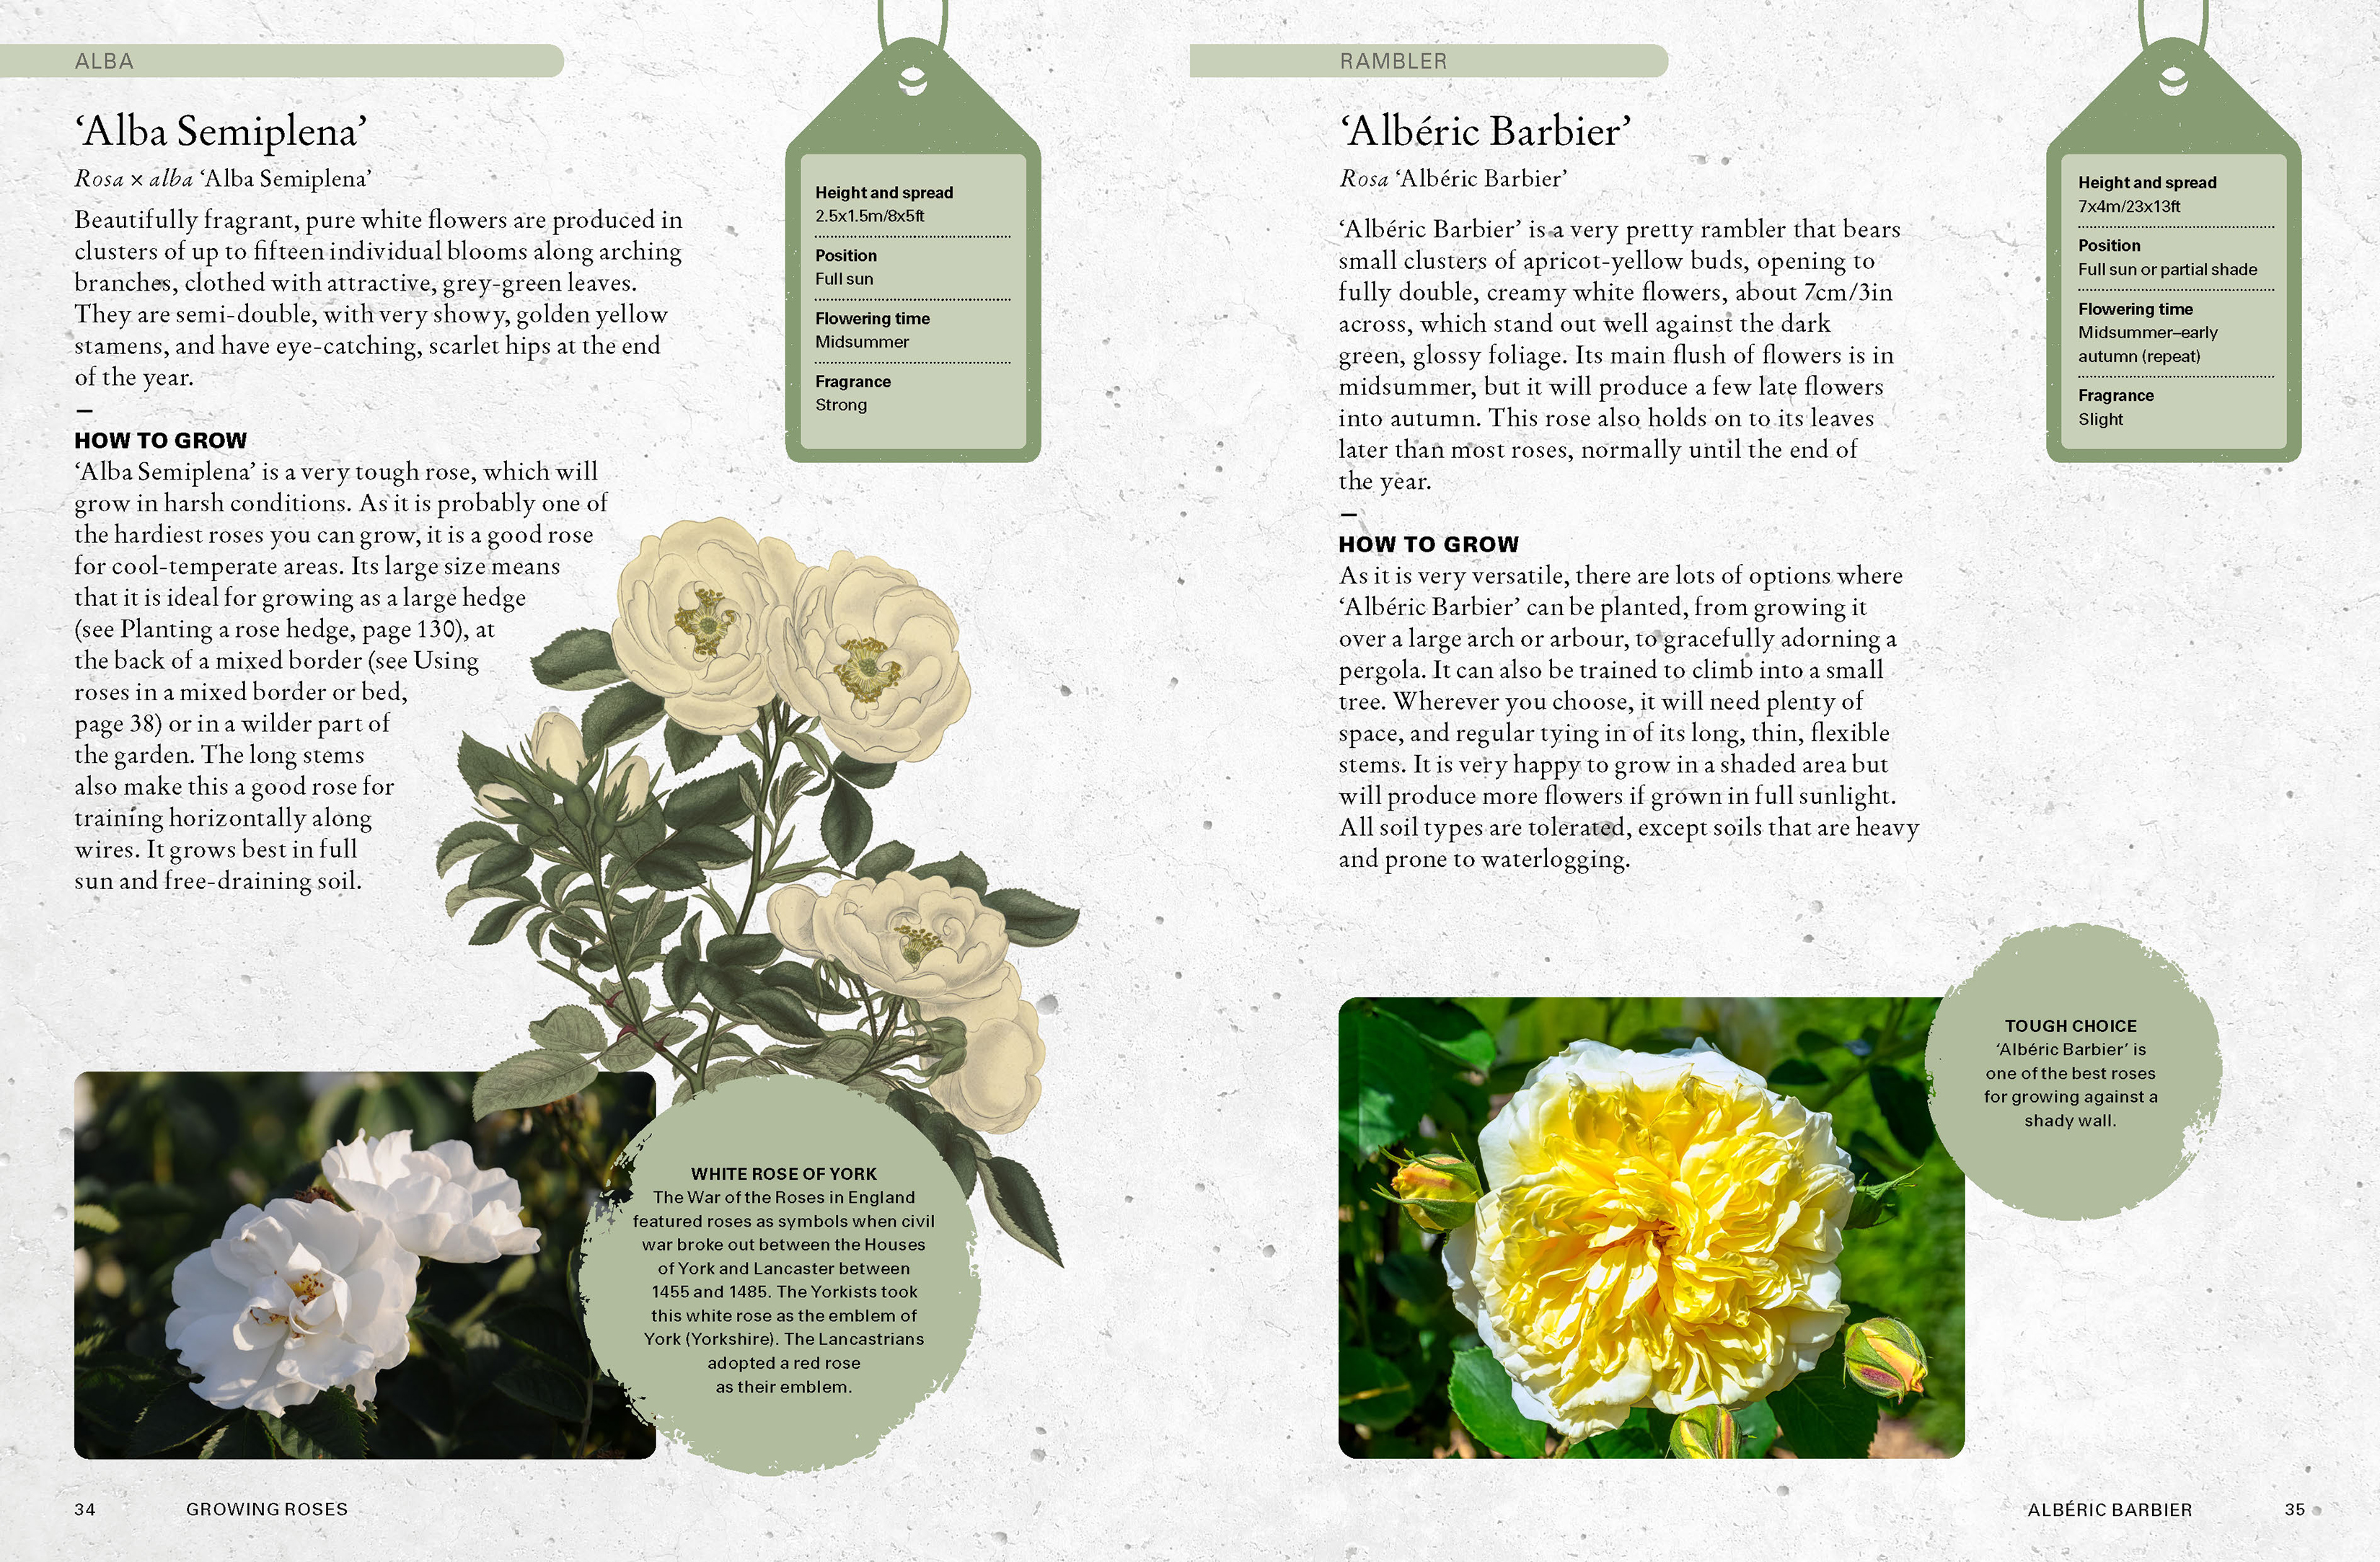 The Kew Gardener's Guide to Growing Roses